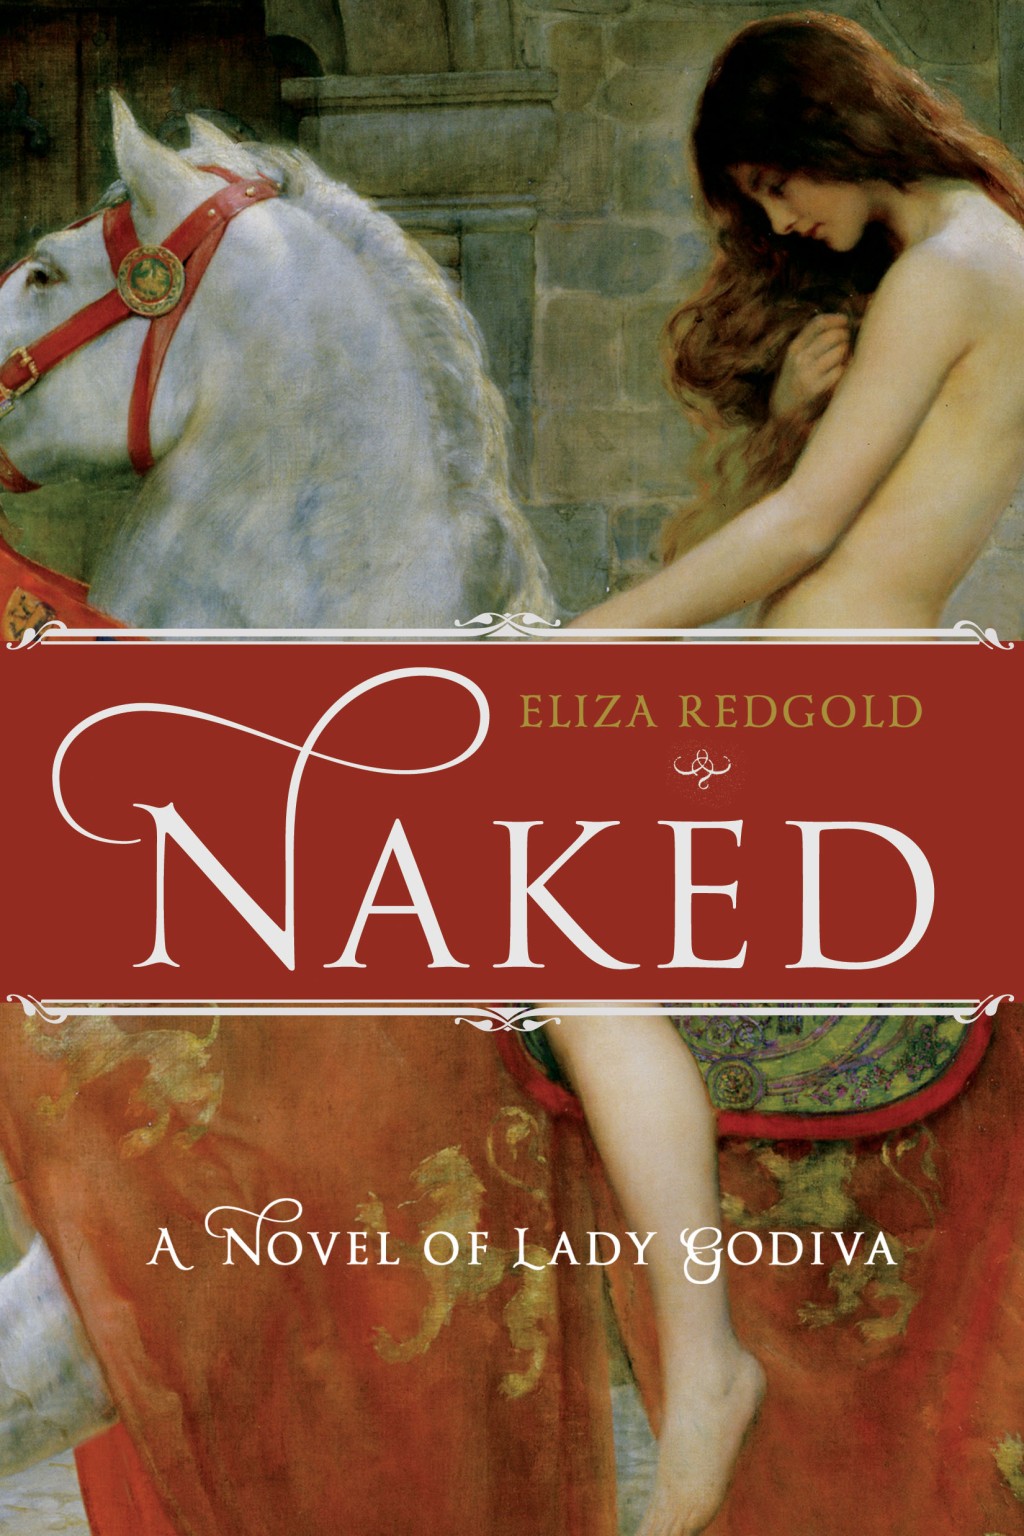 Lady Godiva – a feminist icon and inspiration